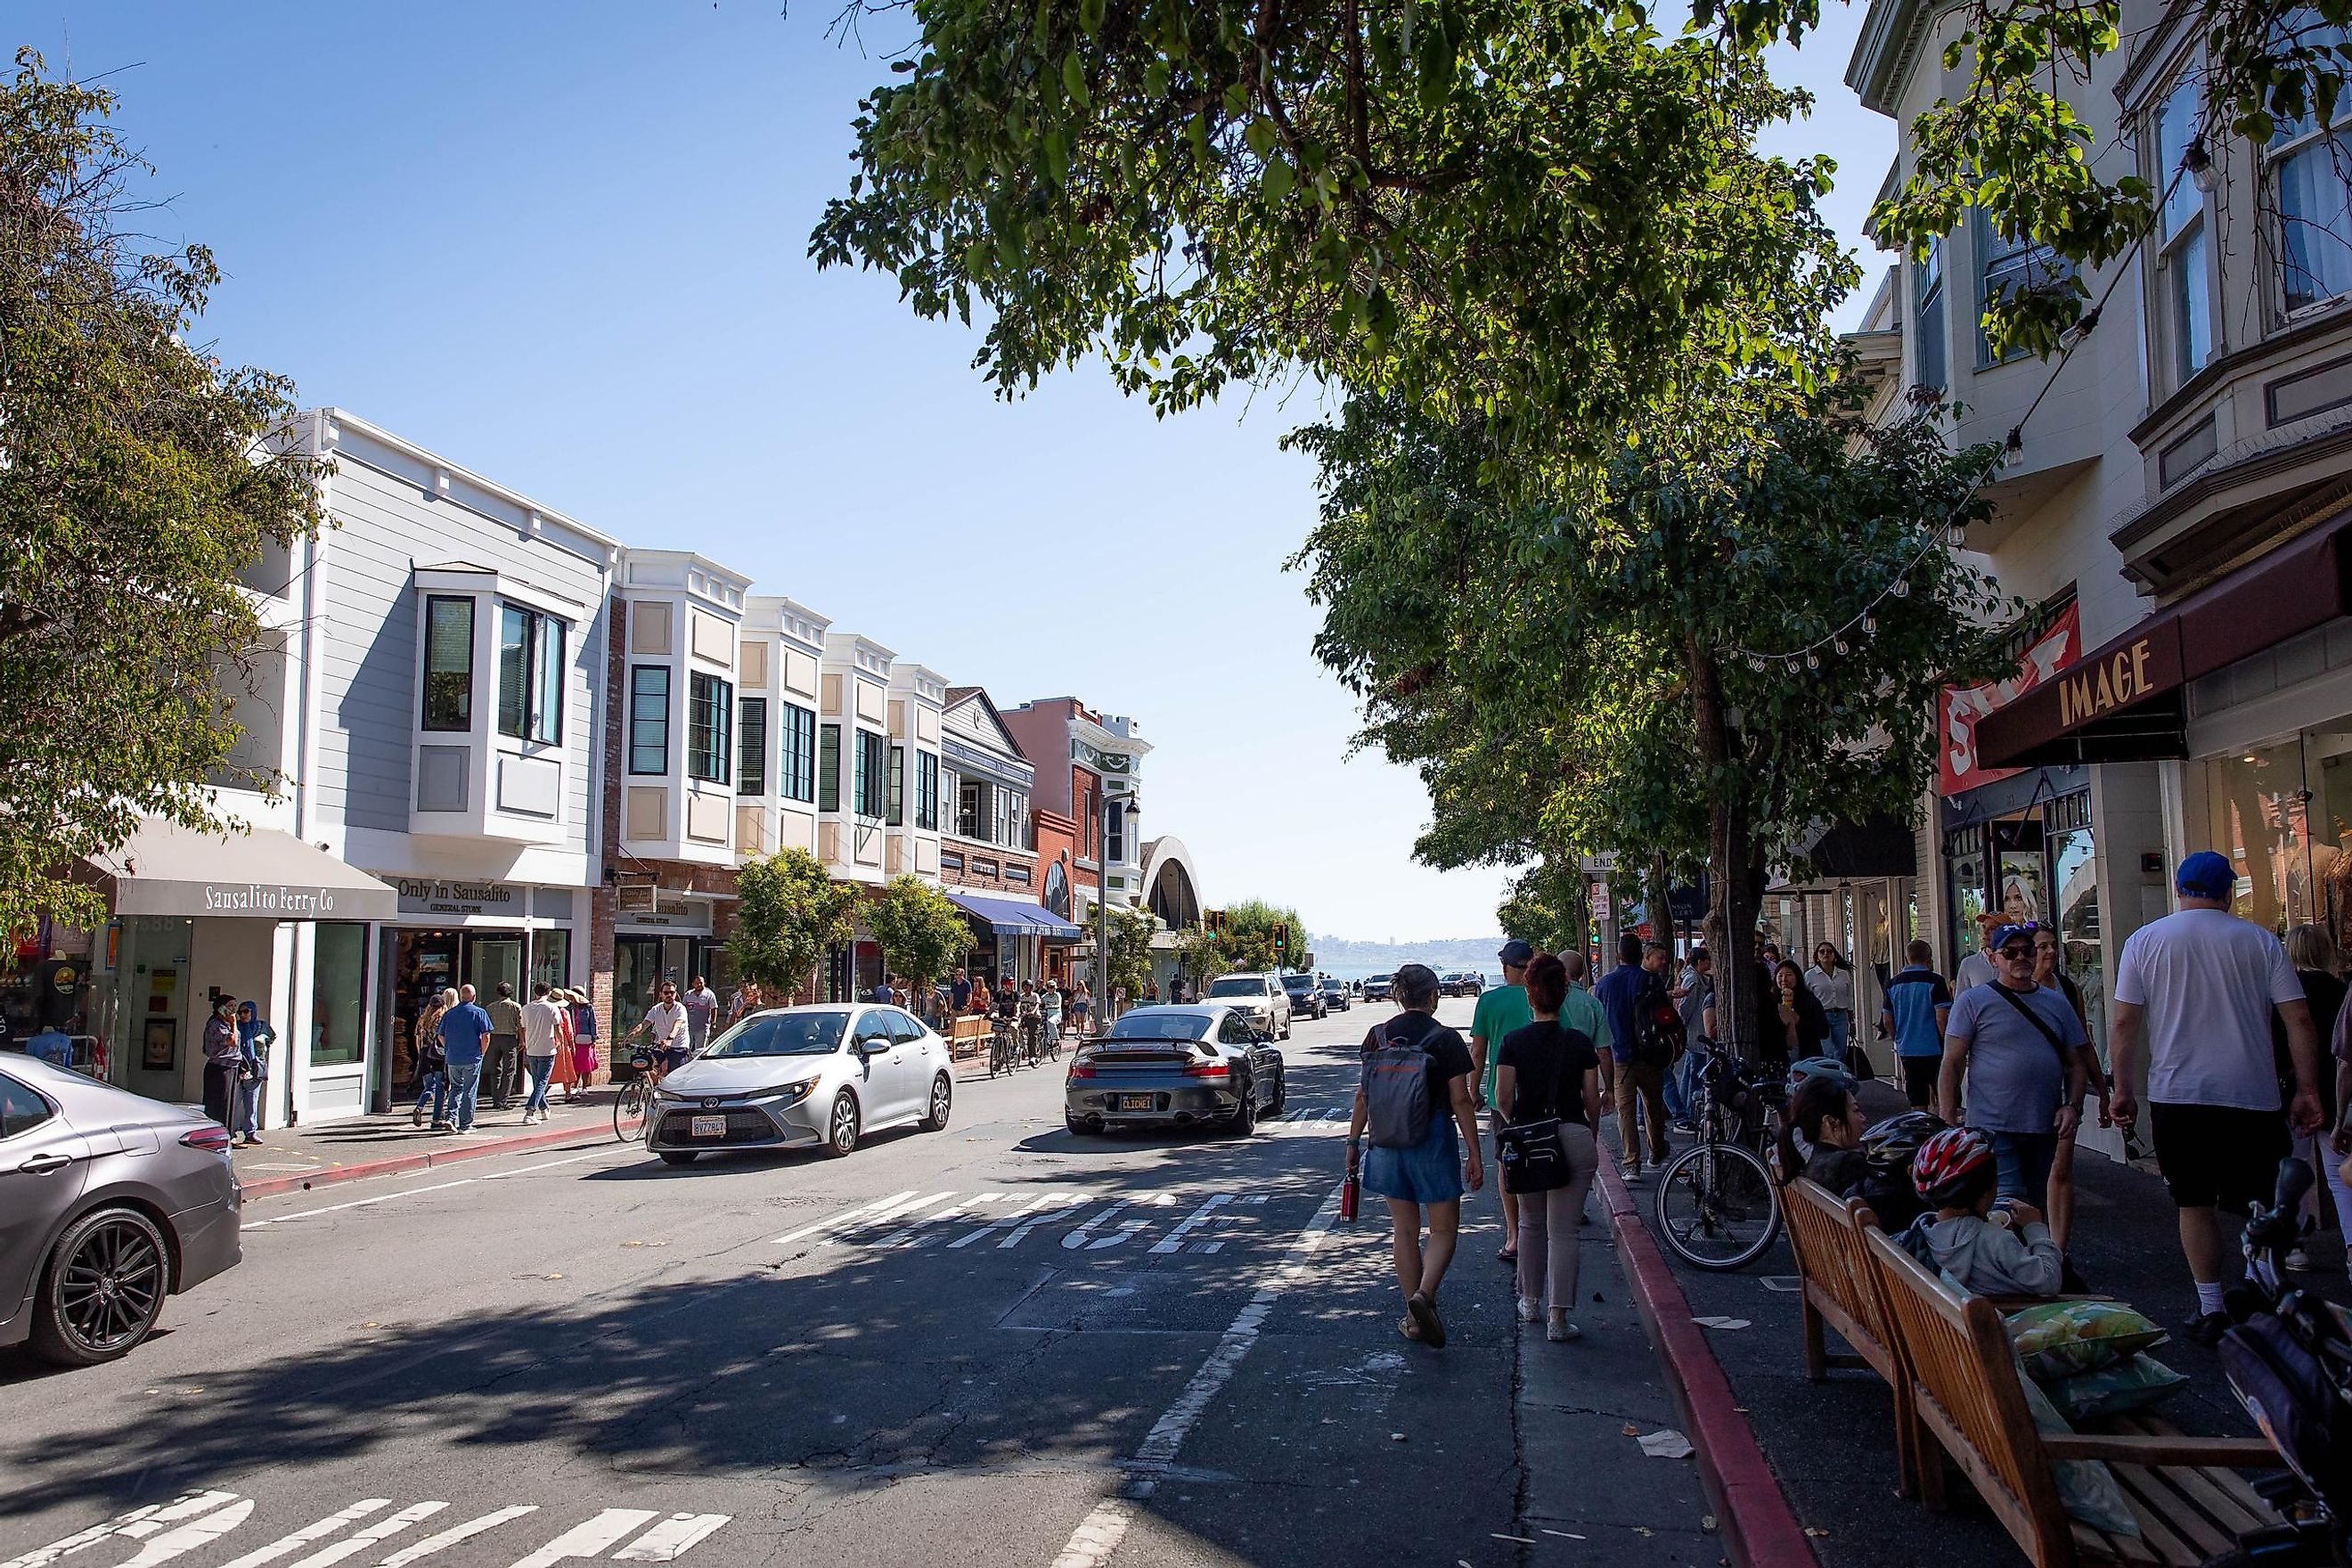 People in the main street of Sausalito, California, via bluestork / Shutterstock.com